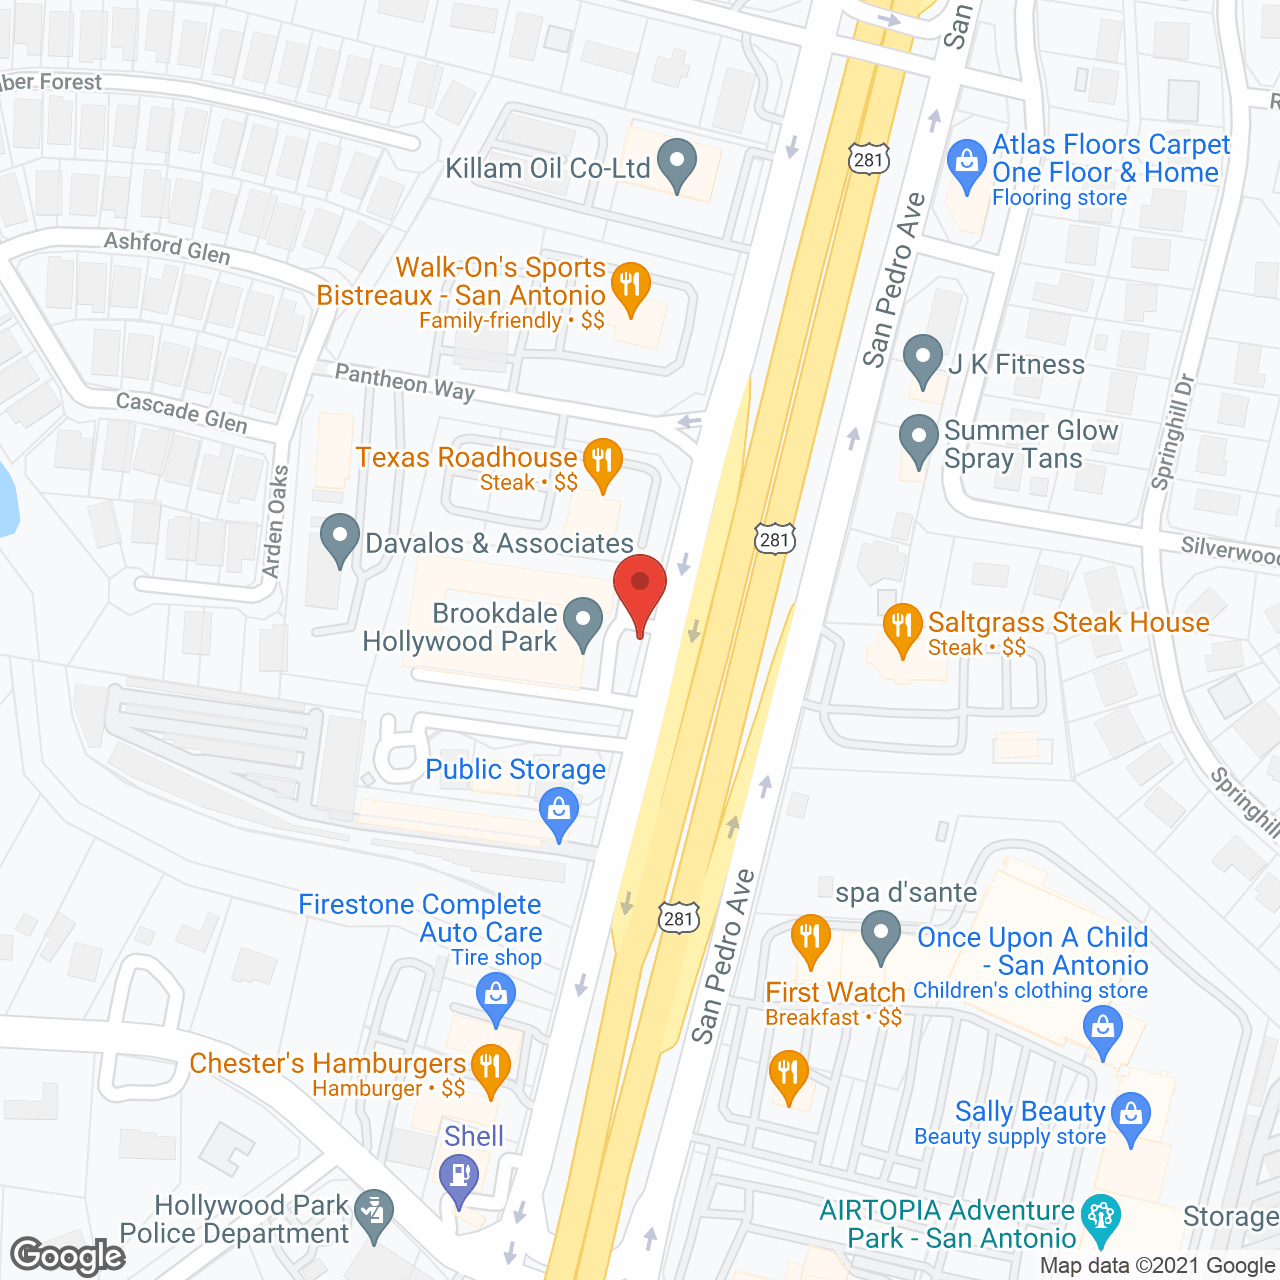 Brookdale Hollywood Park in google map